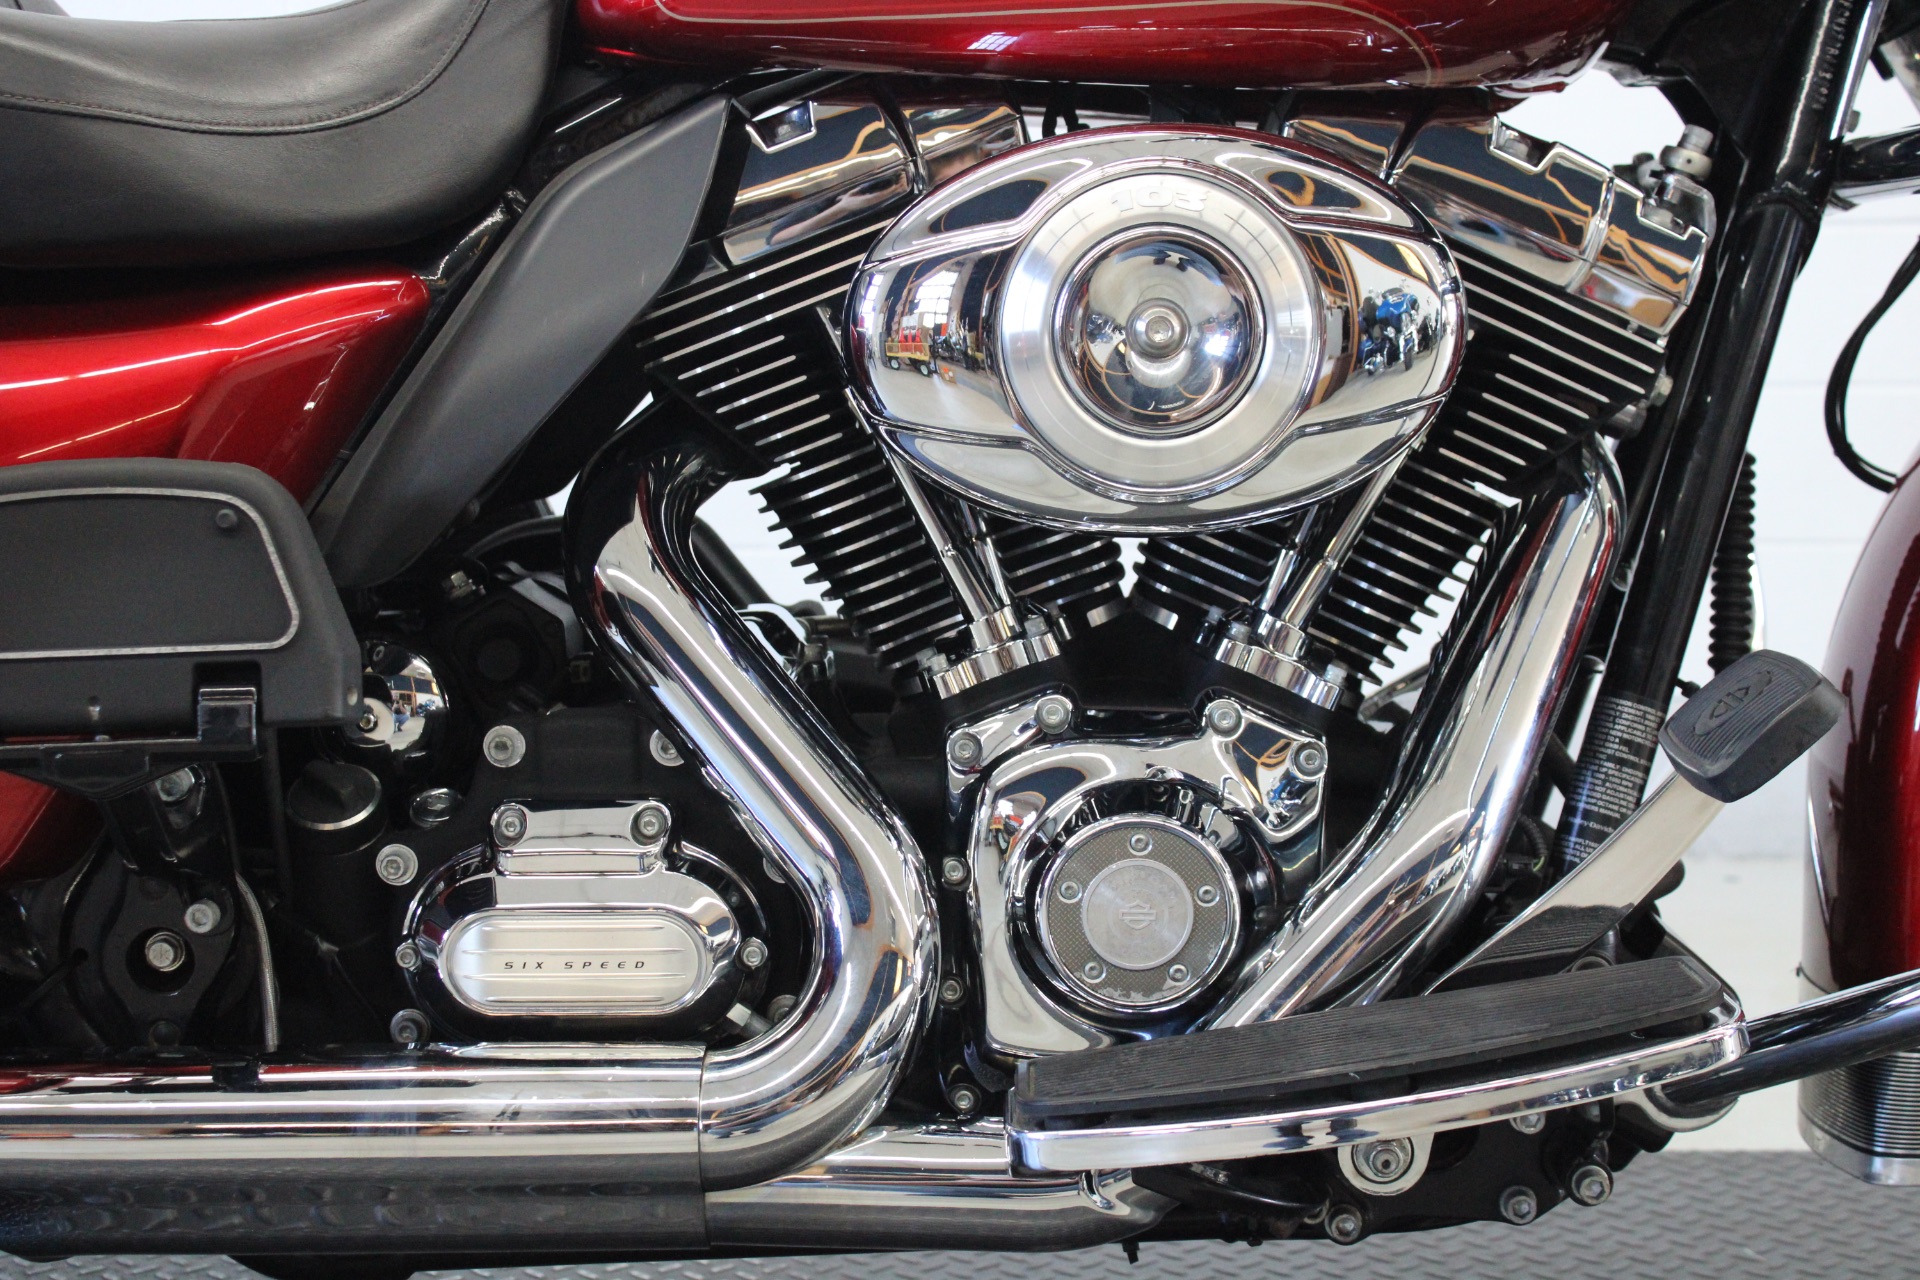 2013 Harley-Davidson Ultra Classic® Electra Glide® in Fredericksburg, Virginia - Photo 14